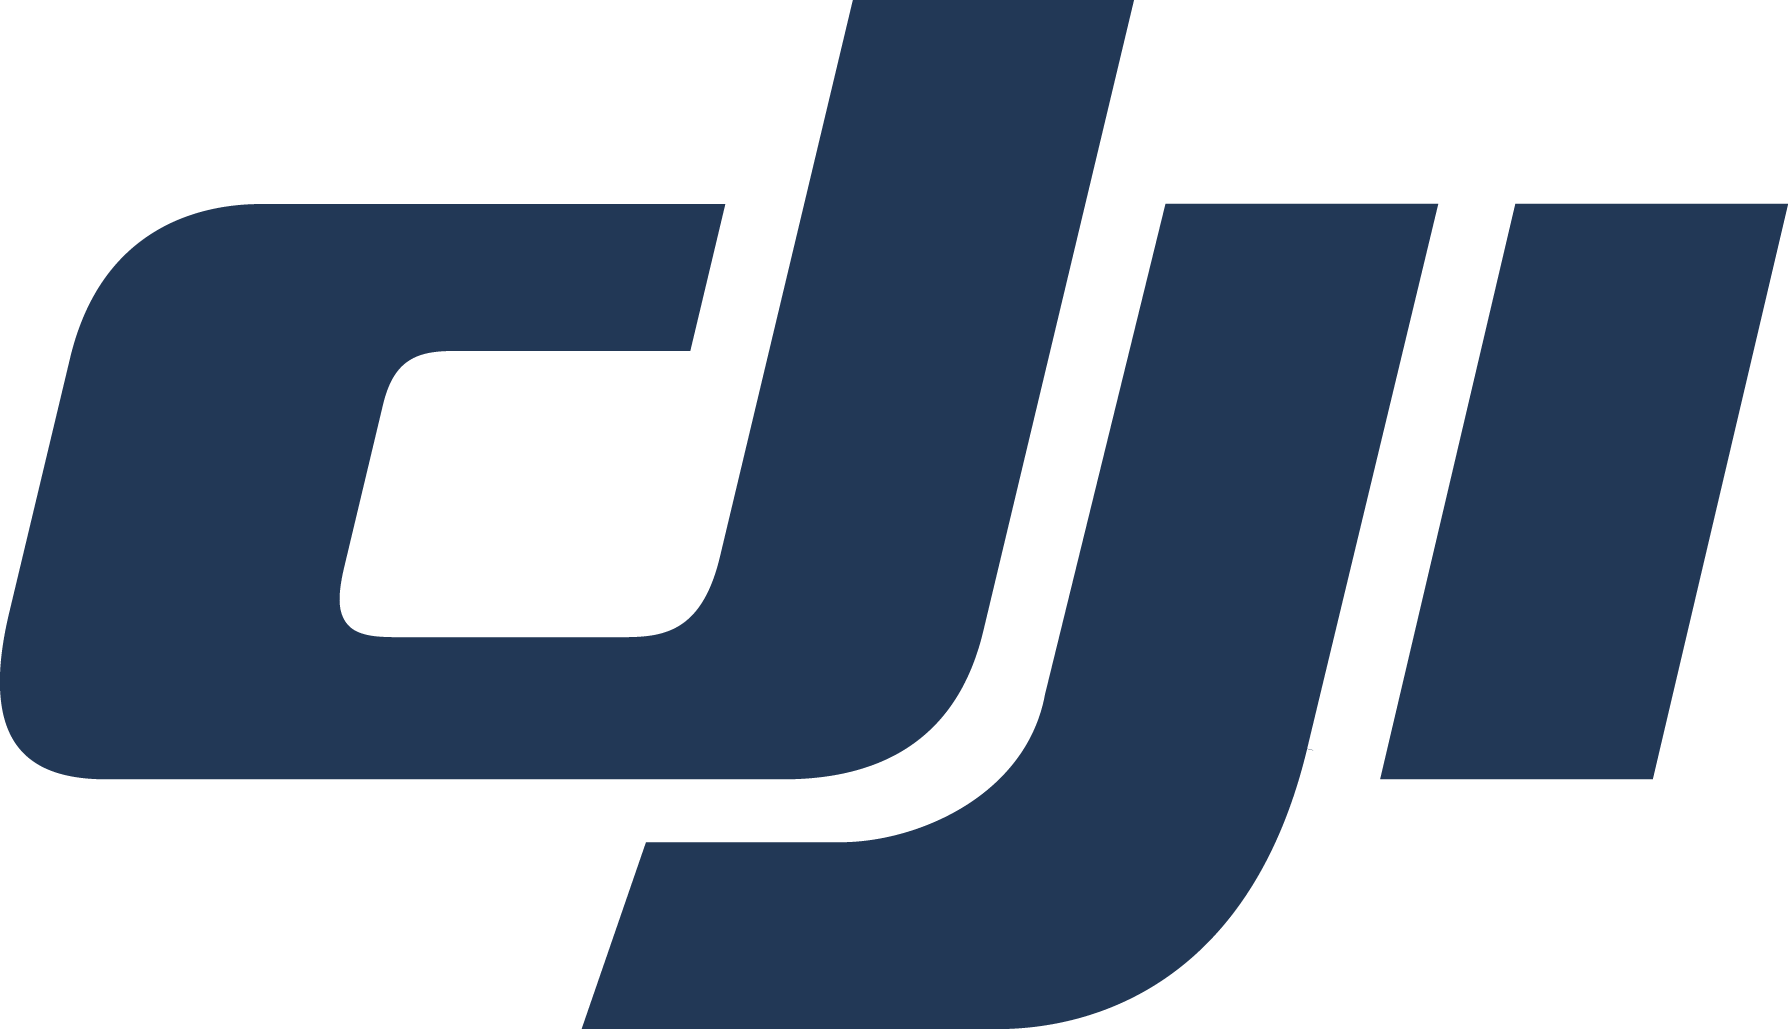 Dji Logo Png - Store, Transparent background PNG HD thumbnail